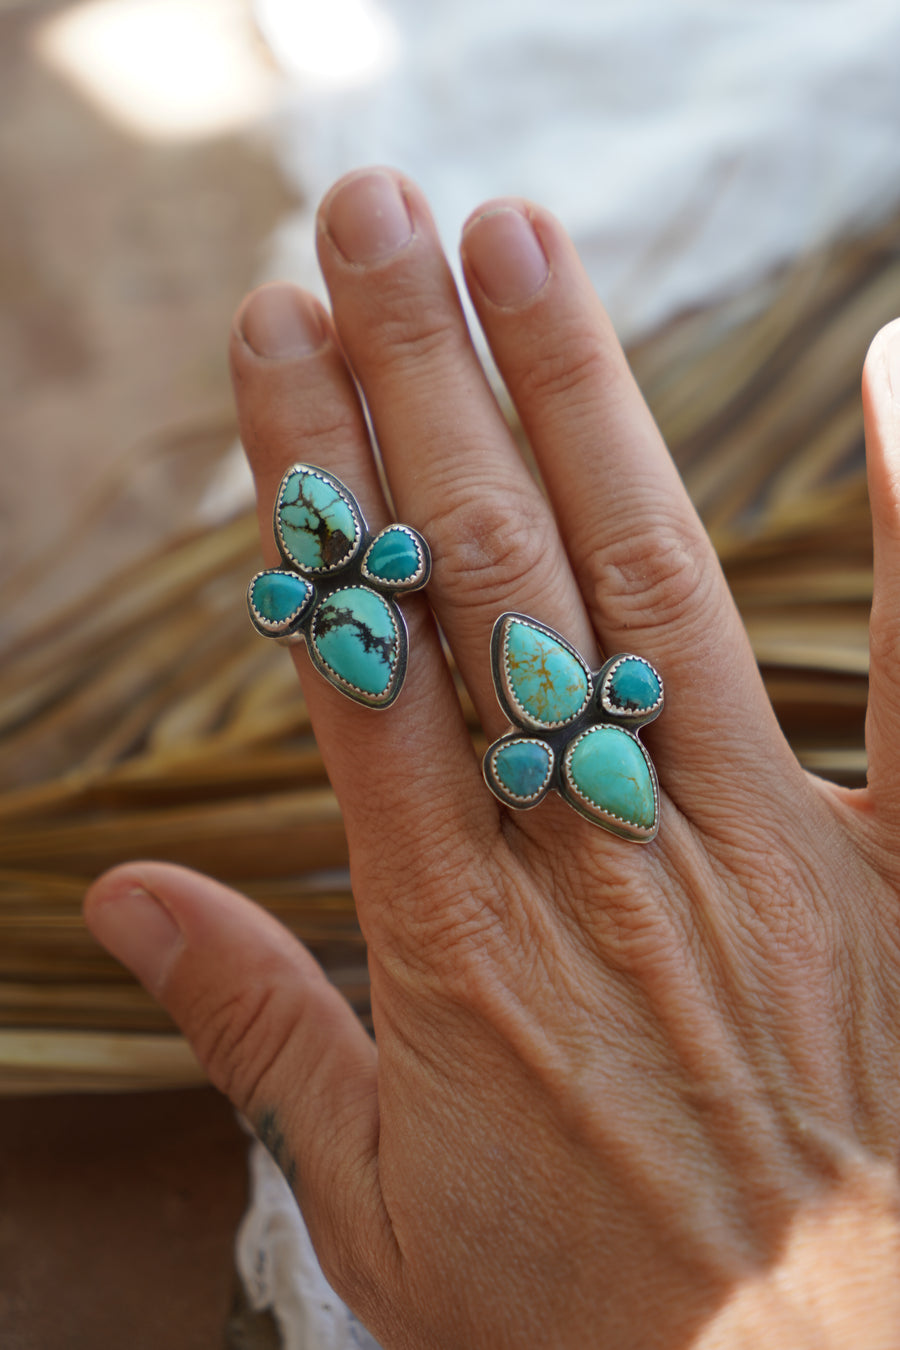 Hubei Turquoise Ring Size 9